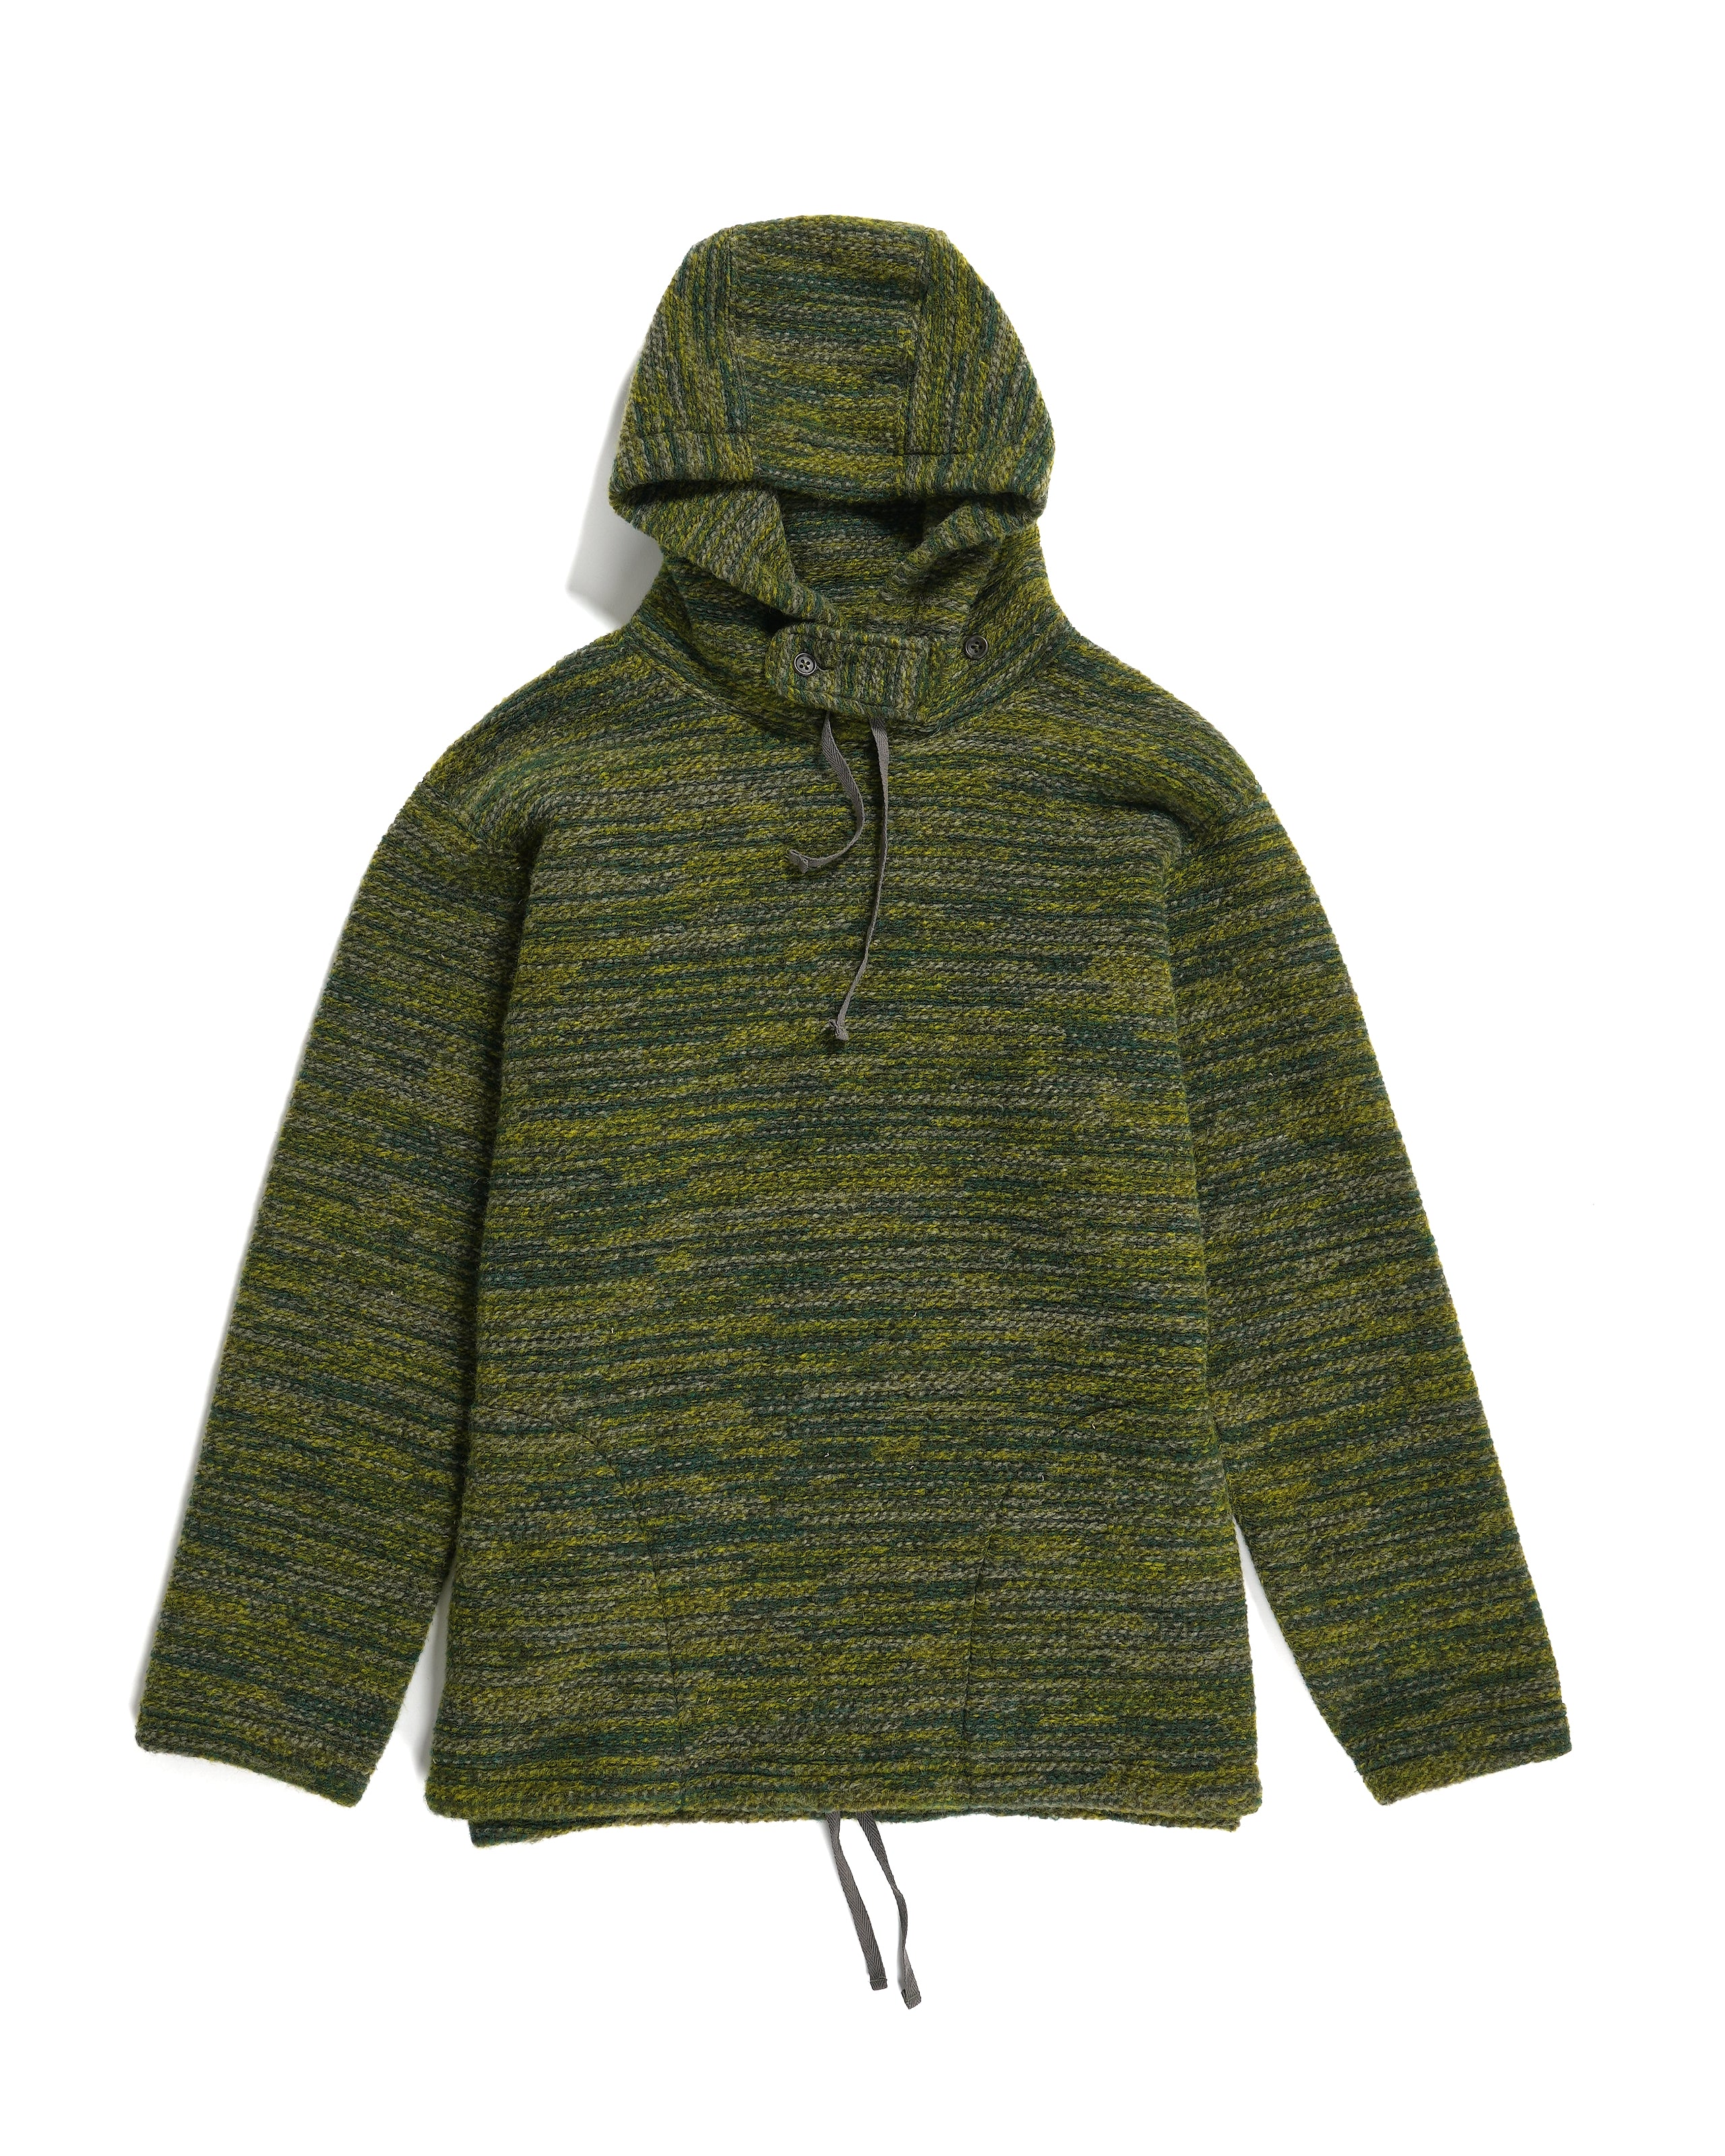 Long Sleeve Hoody - Green Poly Wool Melange Knit